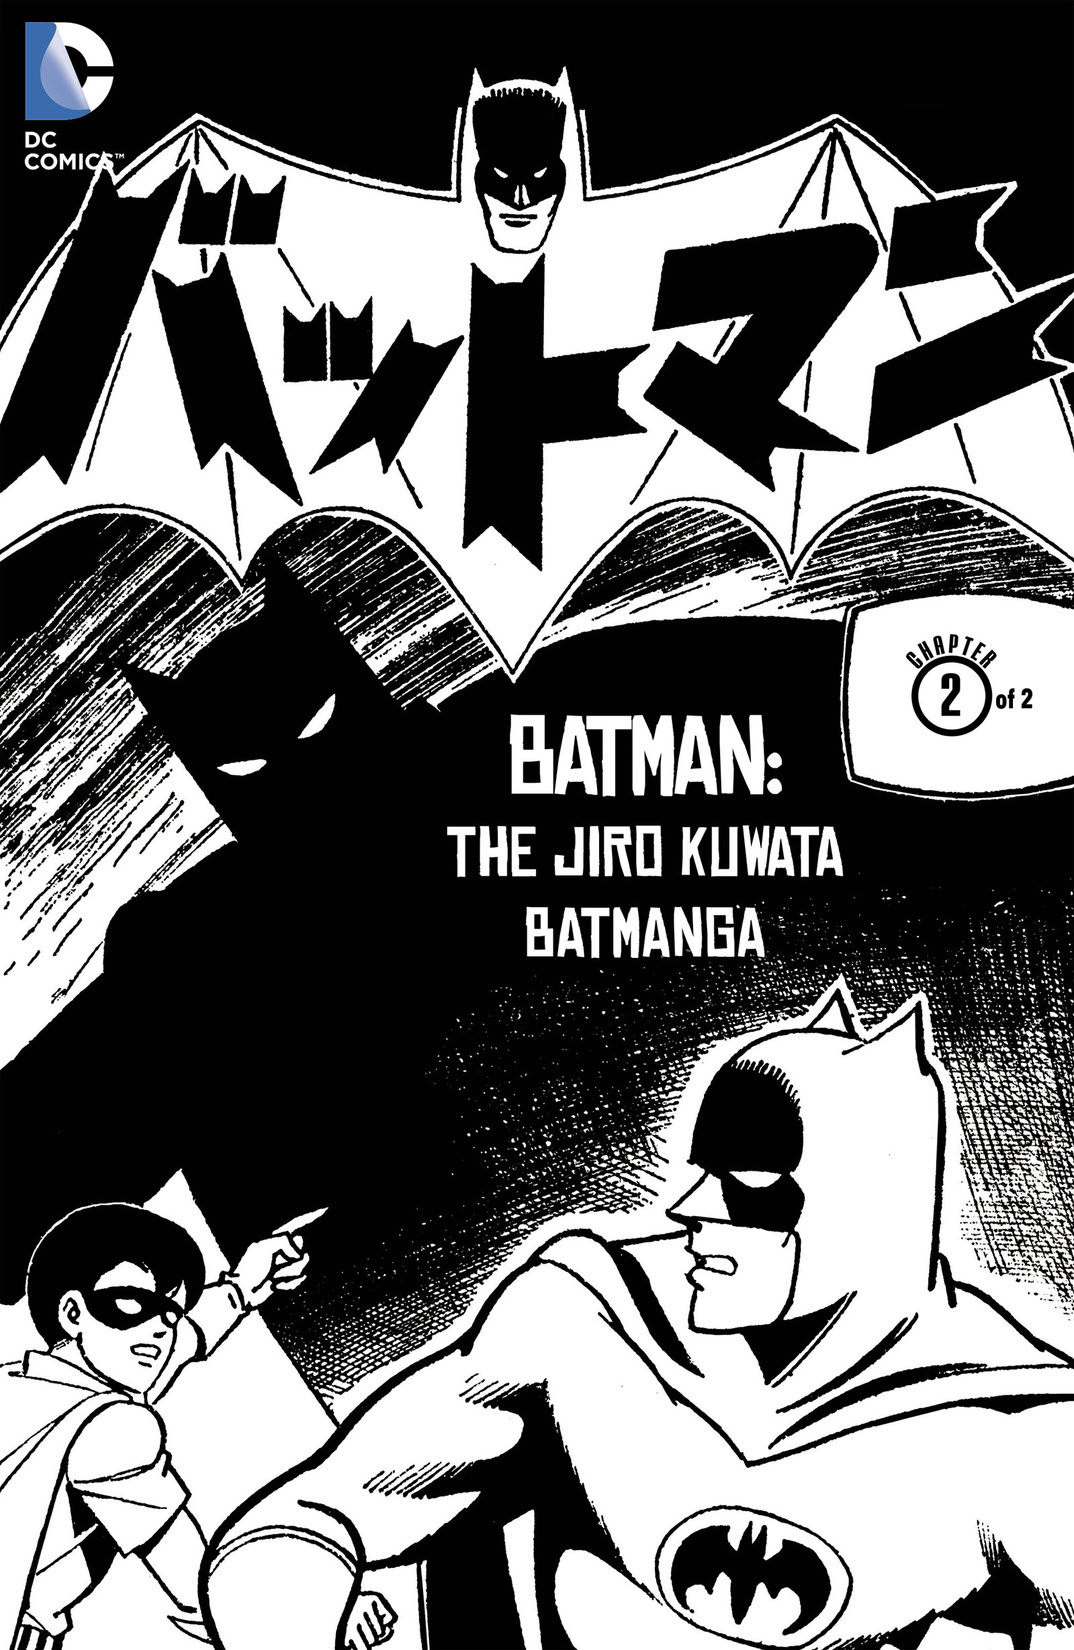 Batman: The Jiro Kuwata Batmanga #51 preview images